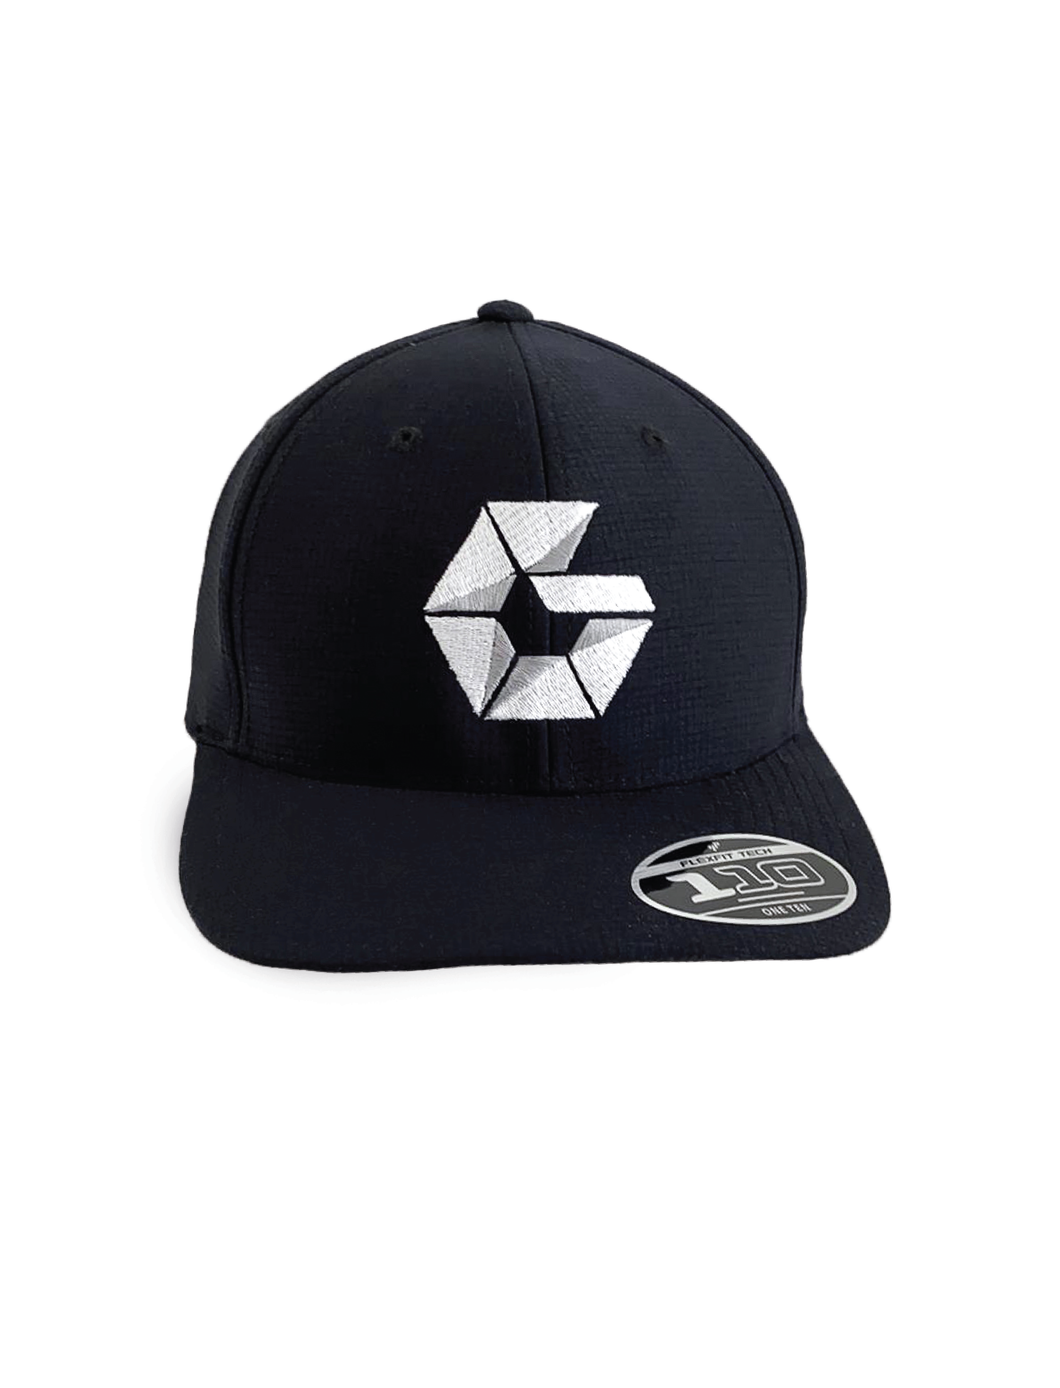 Black iGenius Snapback Hat